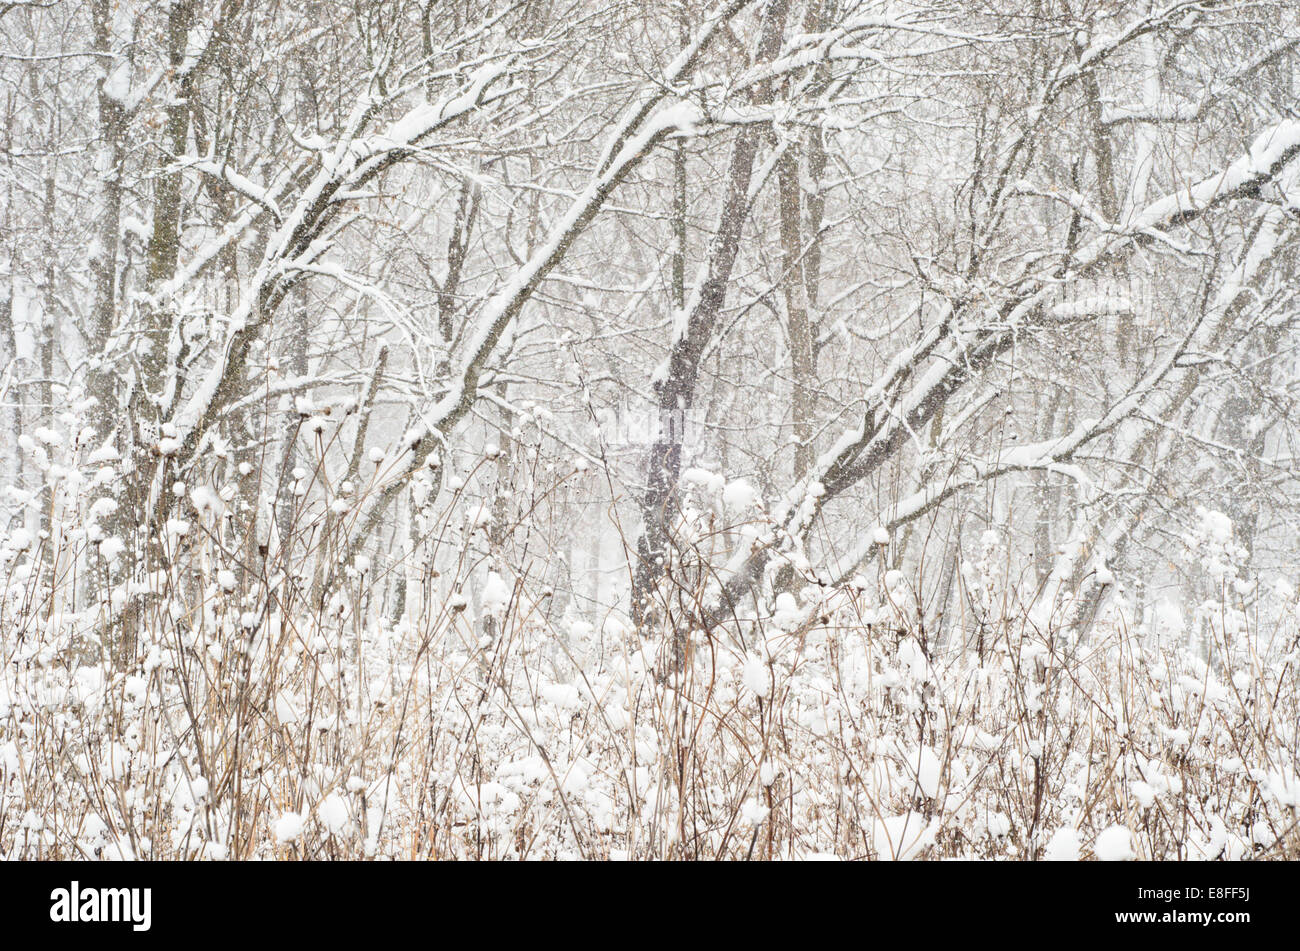 USA, Illinois, DuPage County, Wald in fallenden Schnee Stockfoto